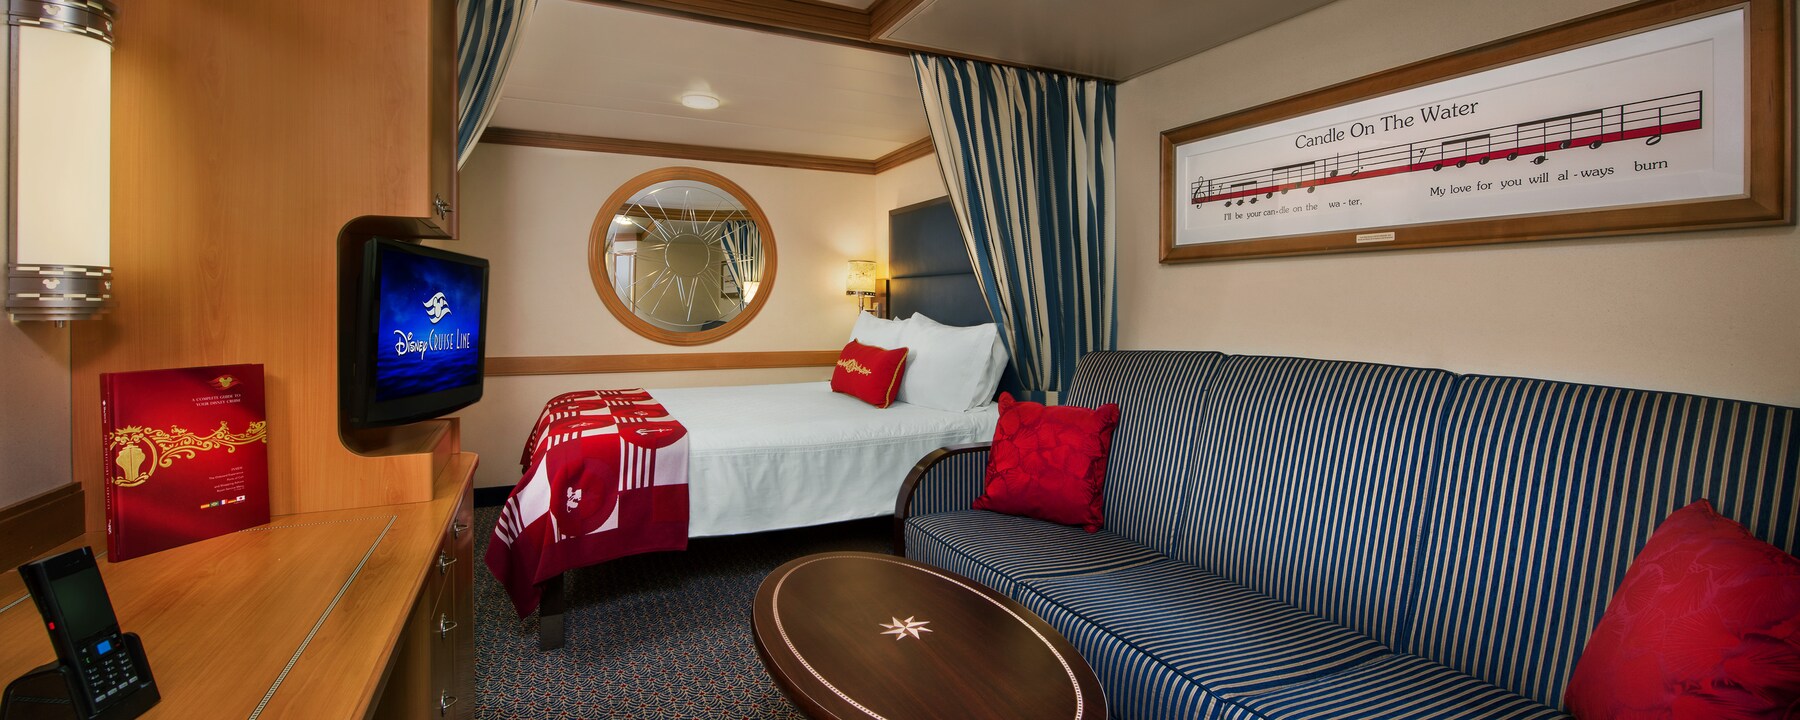 disney cruise cabin tour